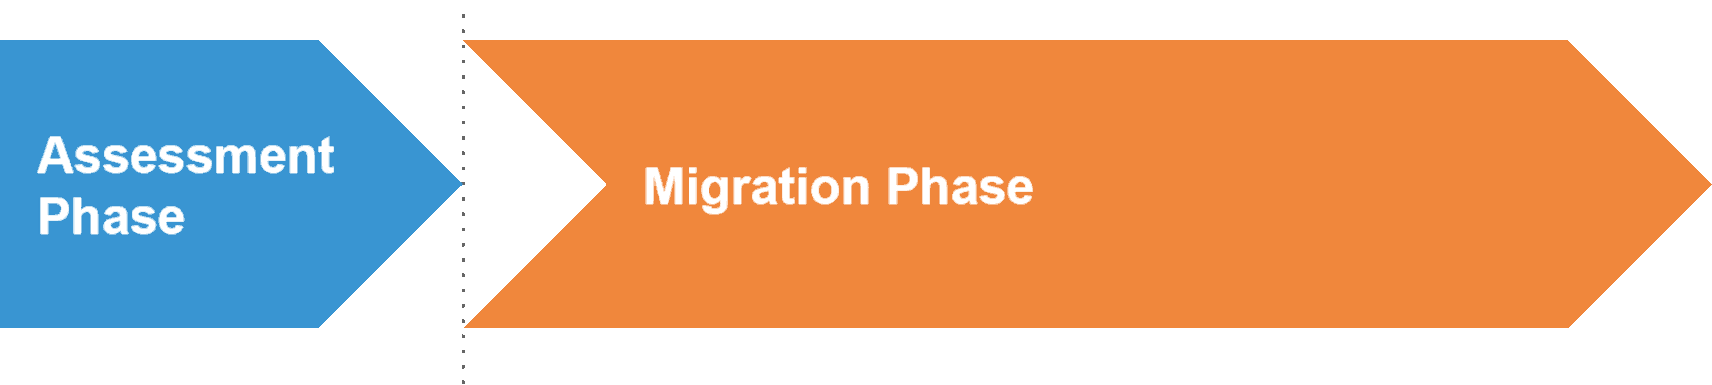 Migration Phase